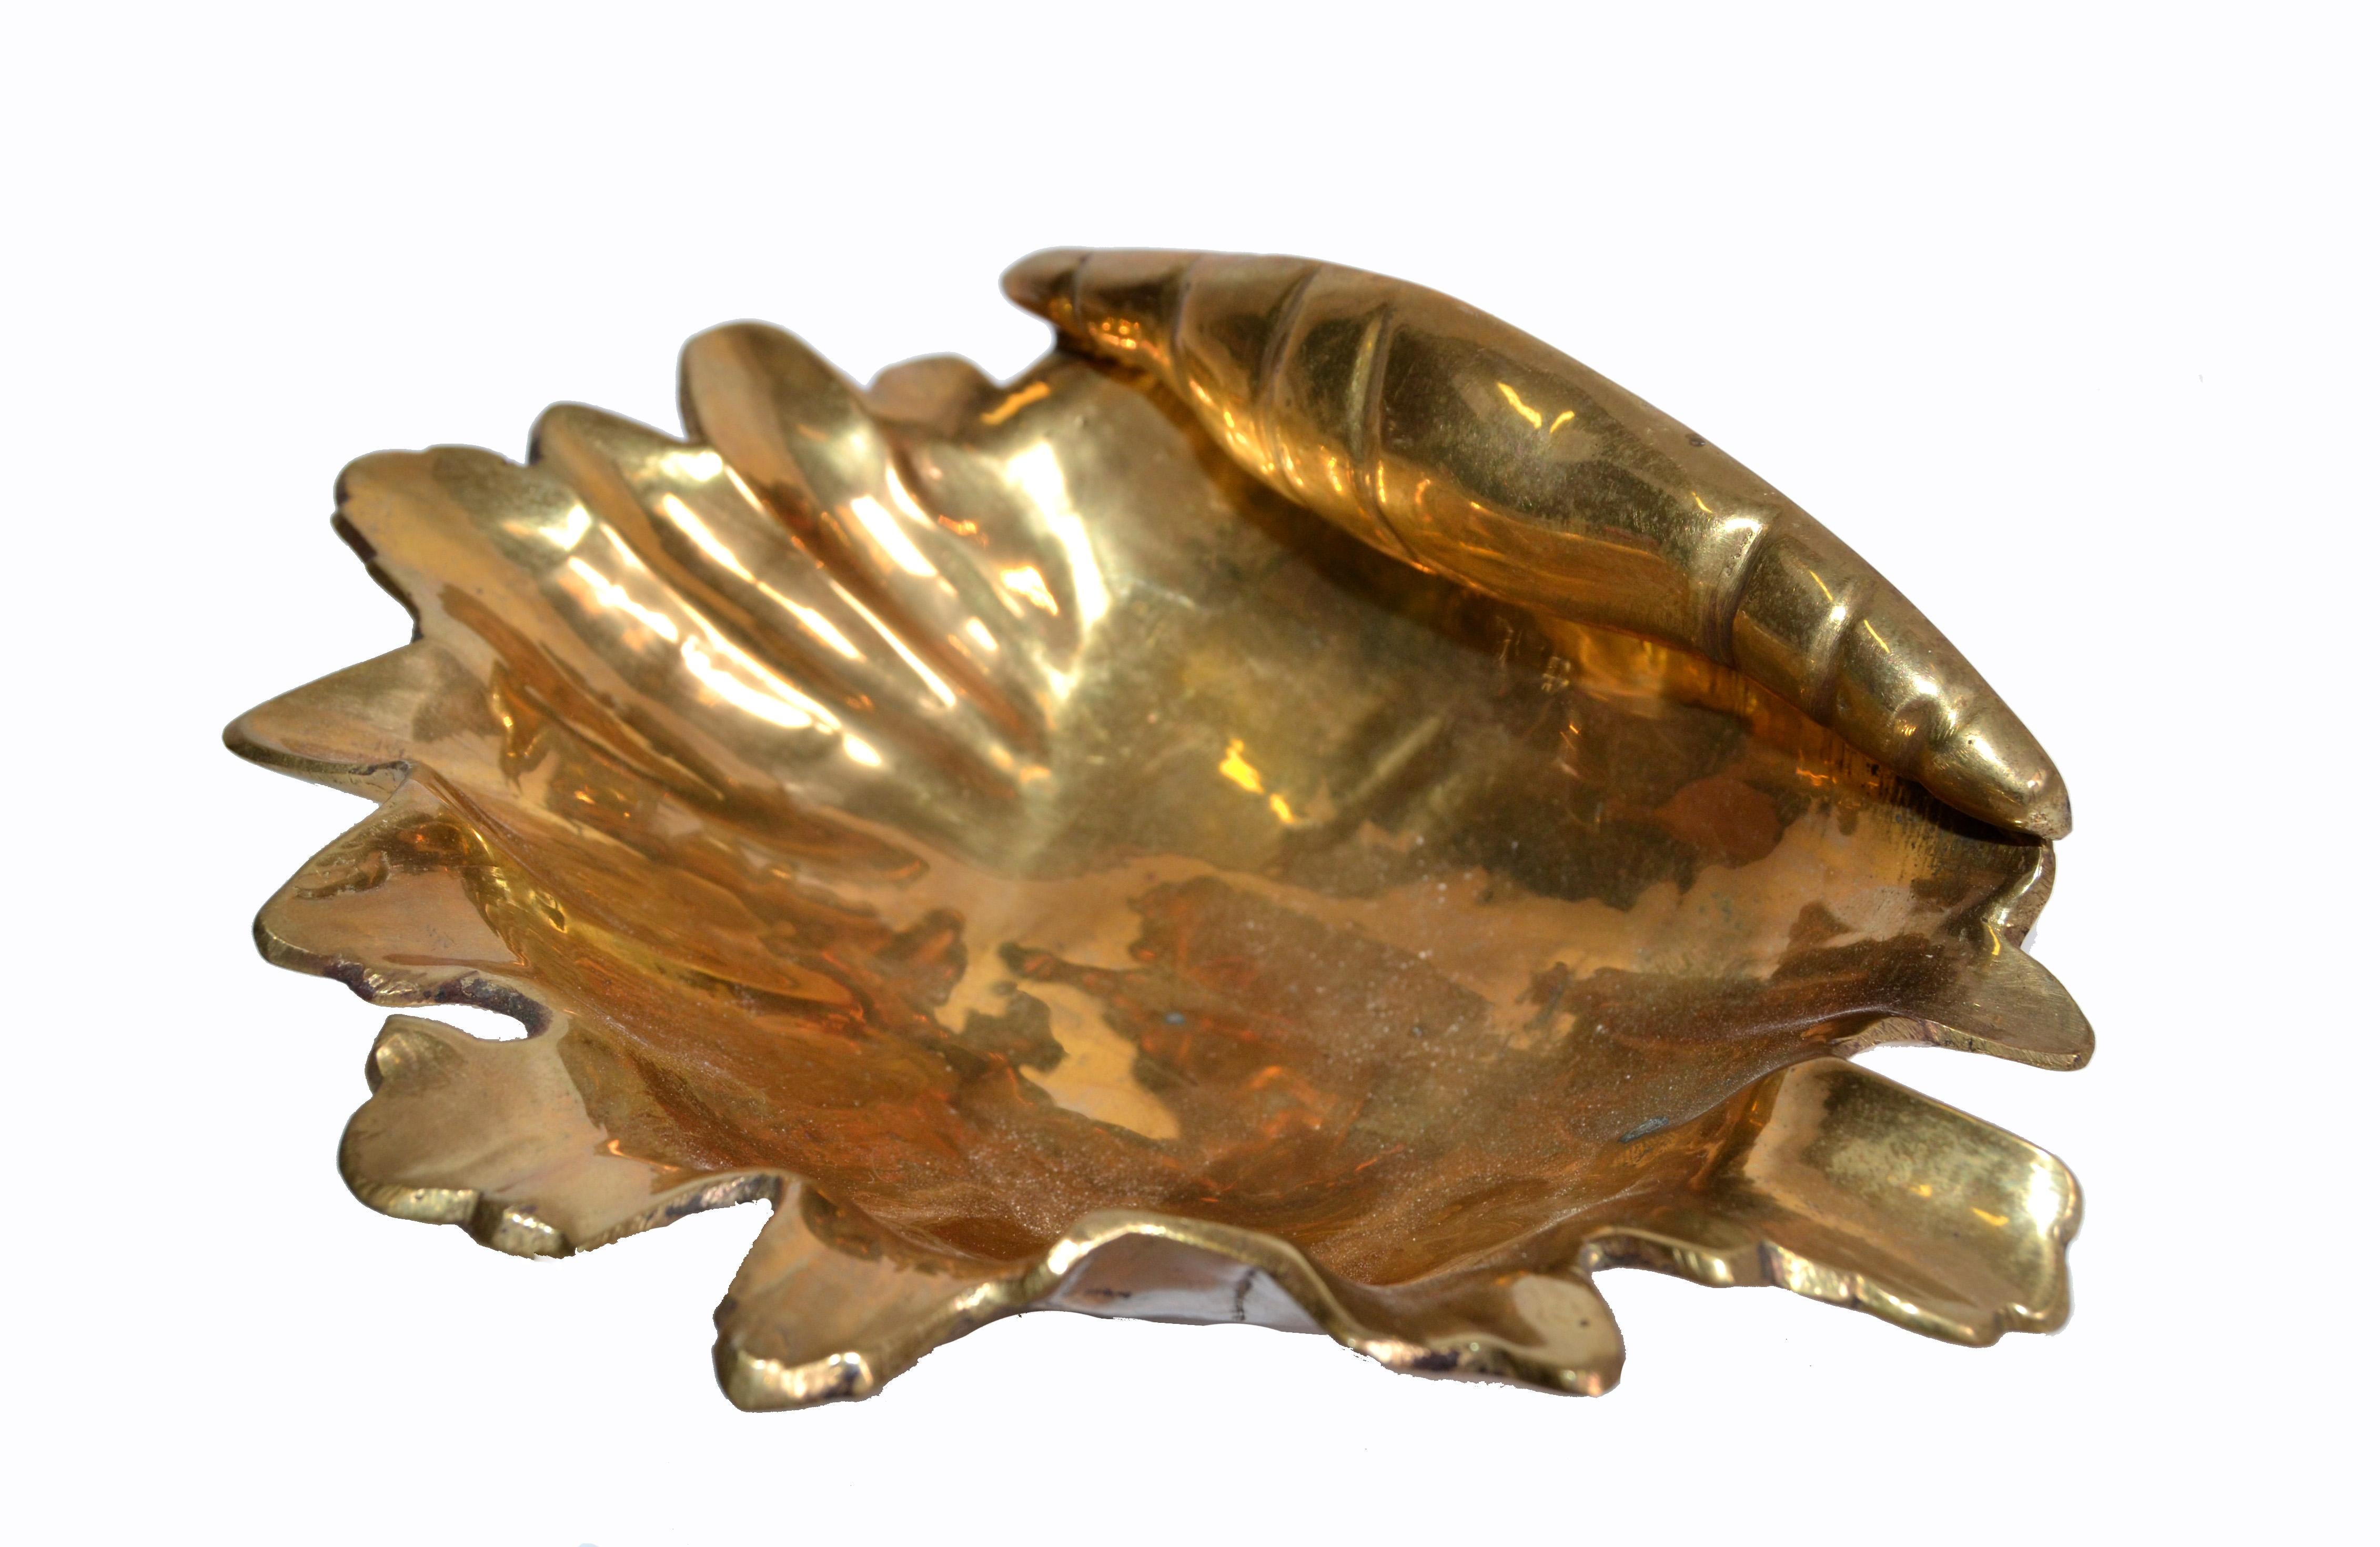 Hollywood Regency bronze footed nautical seashell catchall, bowl, Raymor, Italy.
Original label underneath.